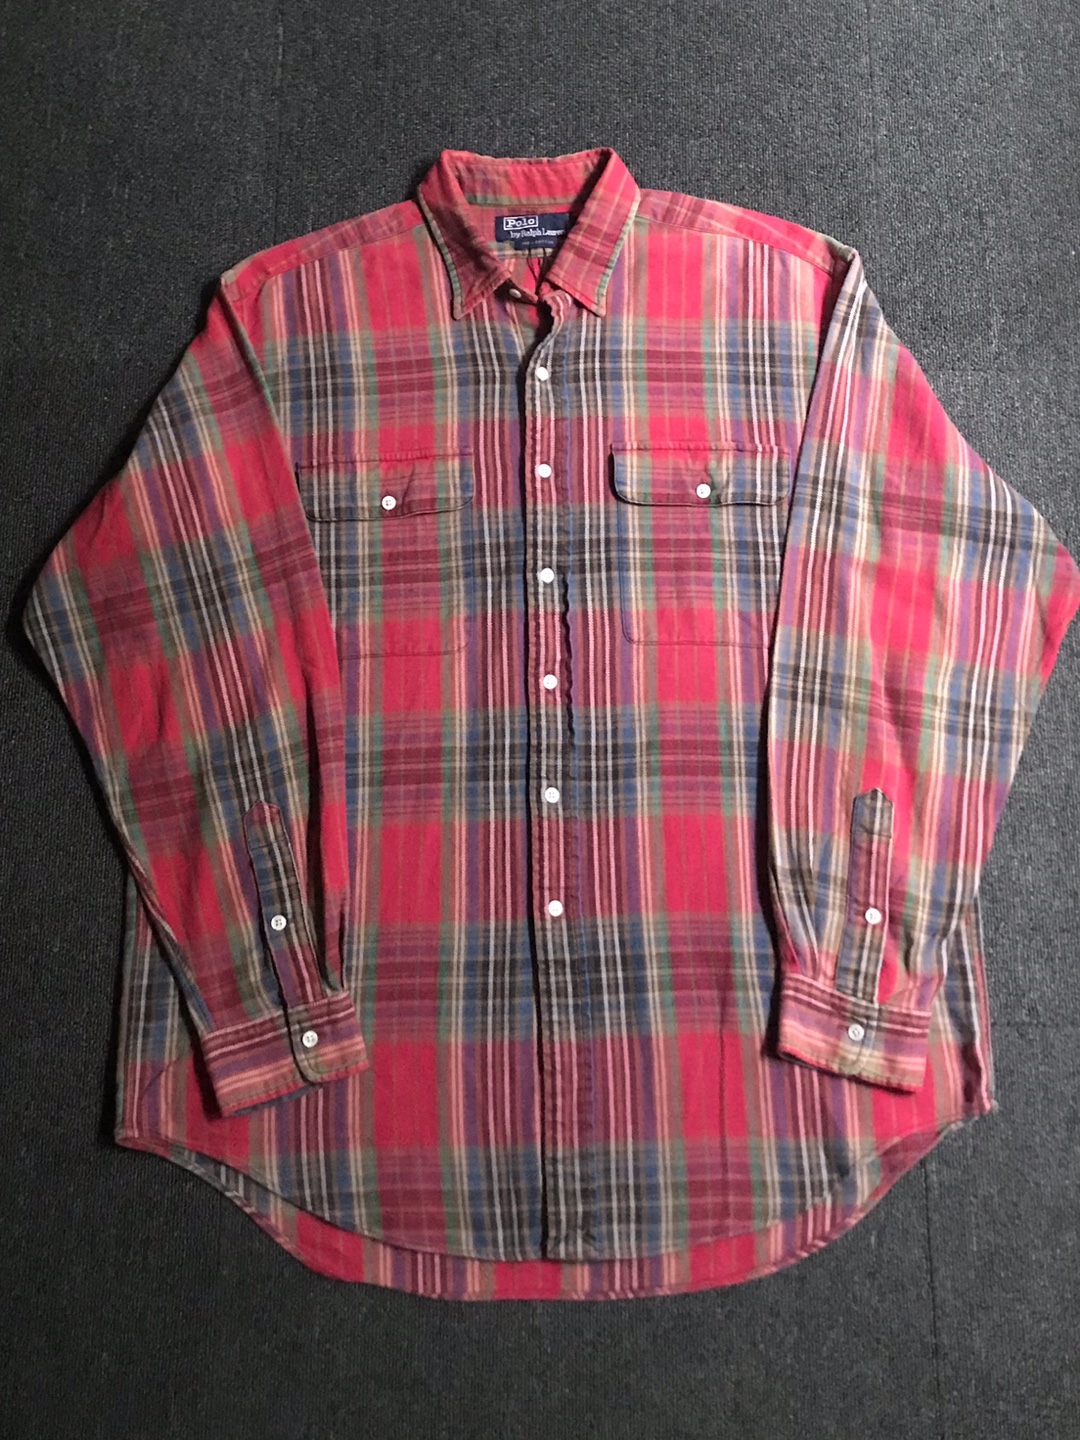 Polo RL faded cotton plaid work shirt (L size, 103~ 추천)